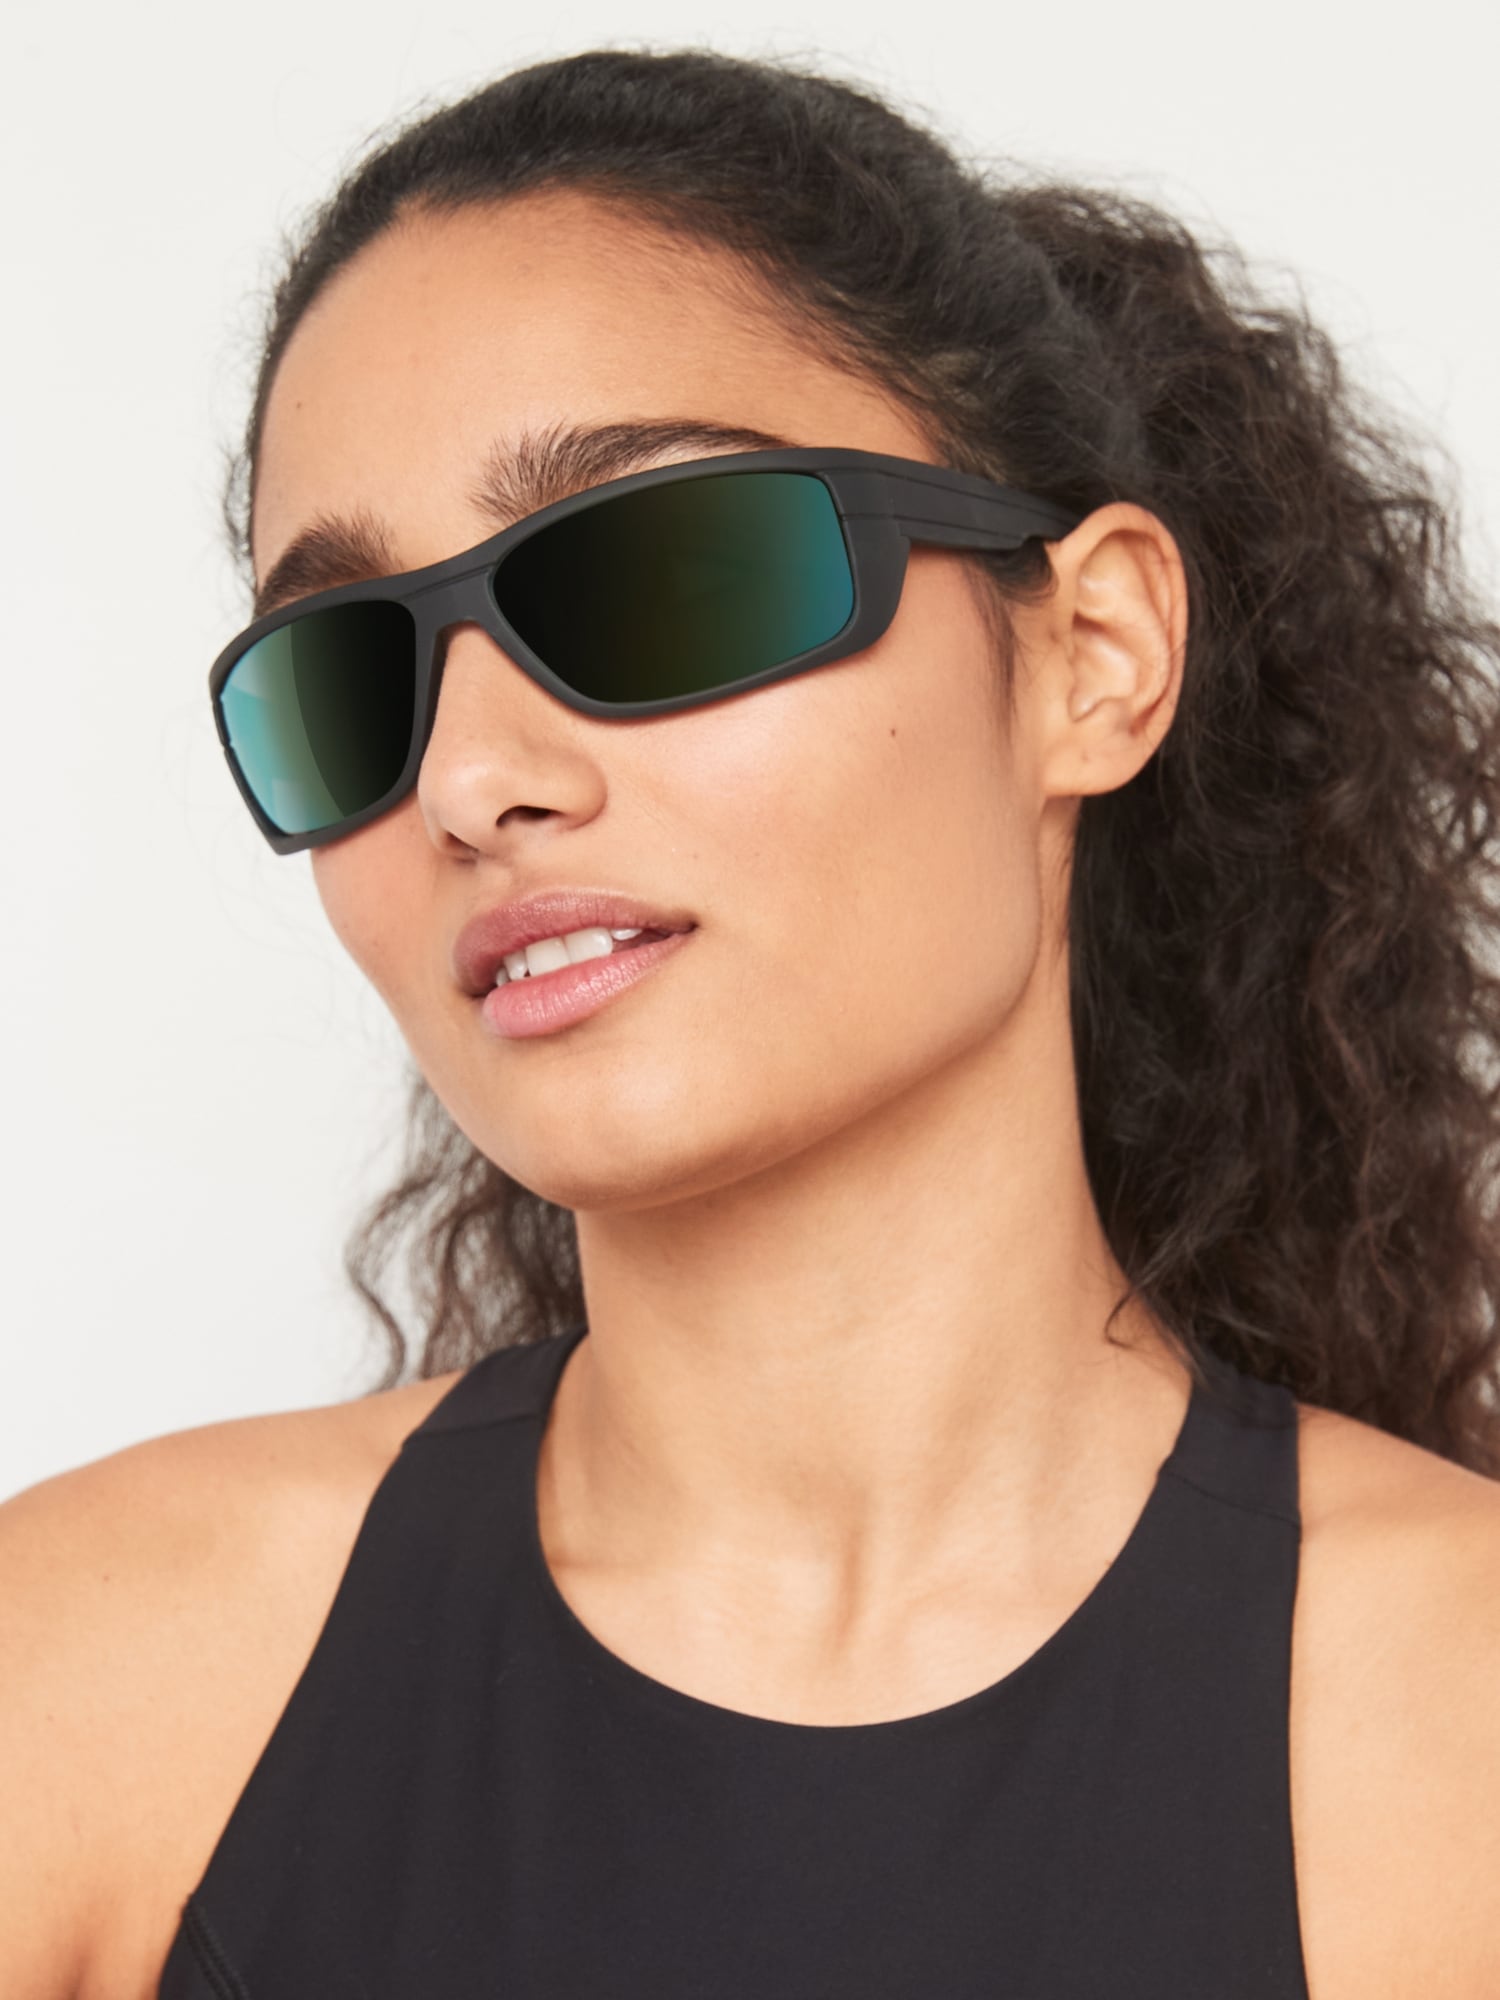 Mirrored sports sunglasses